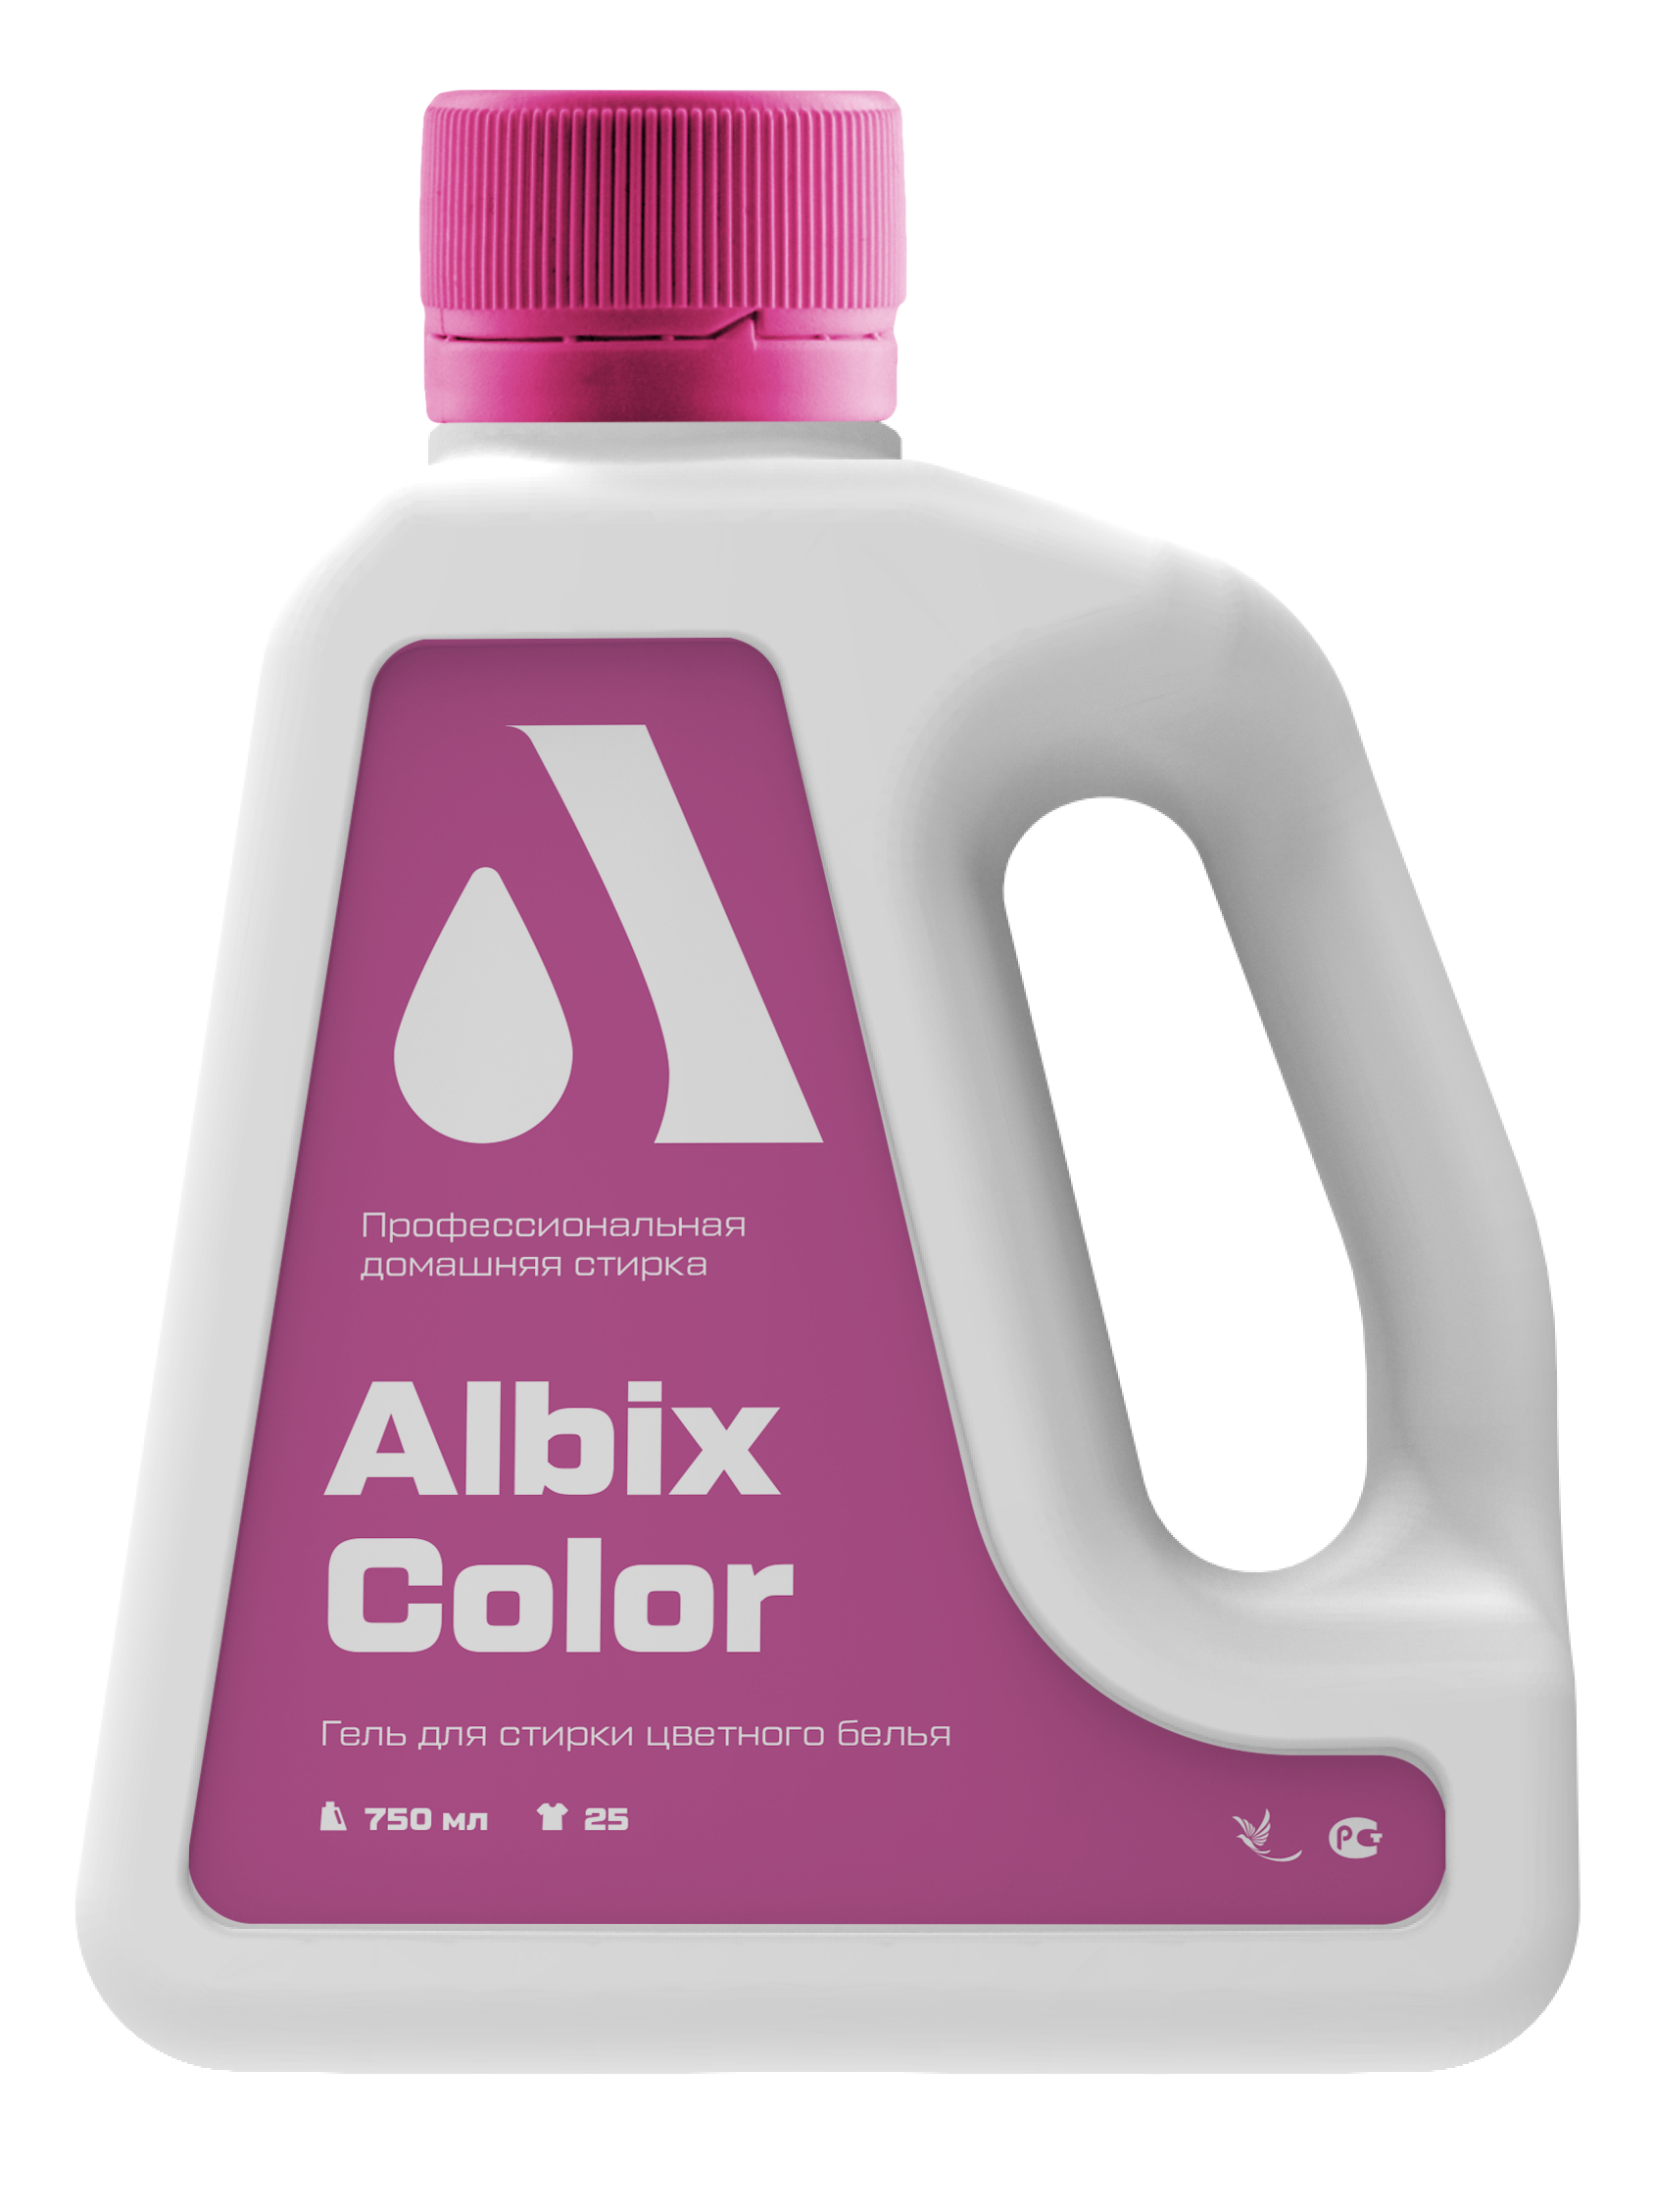 Albix